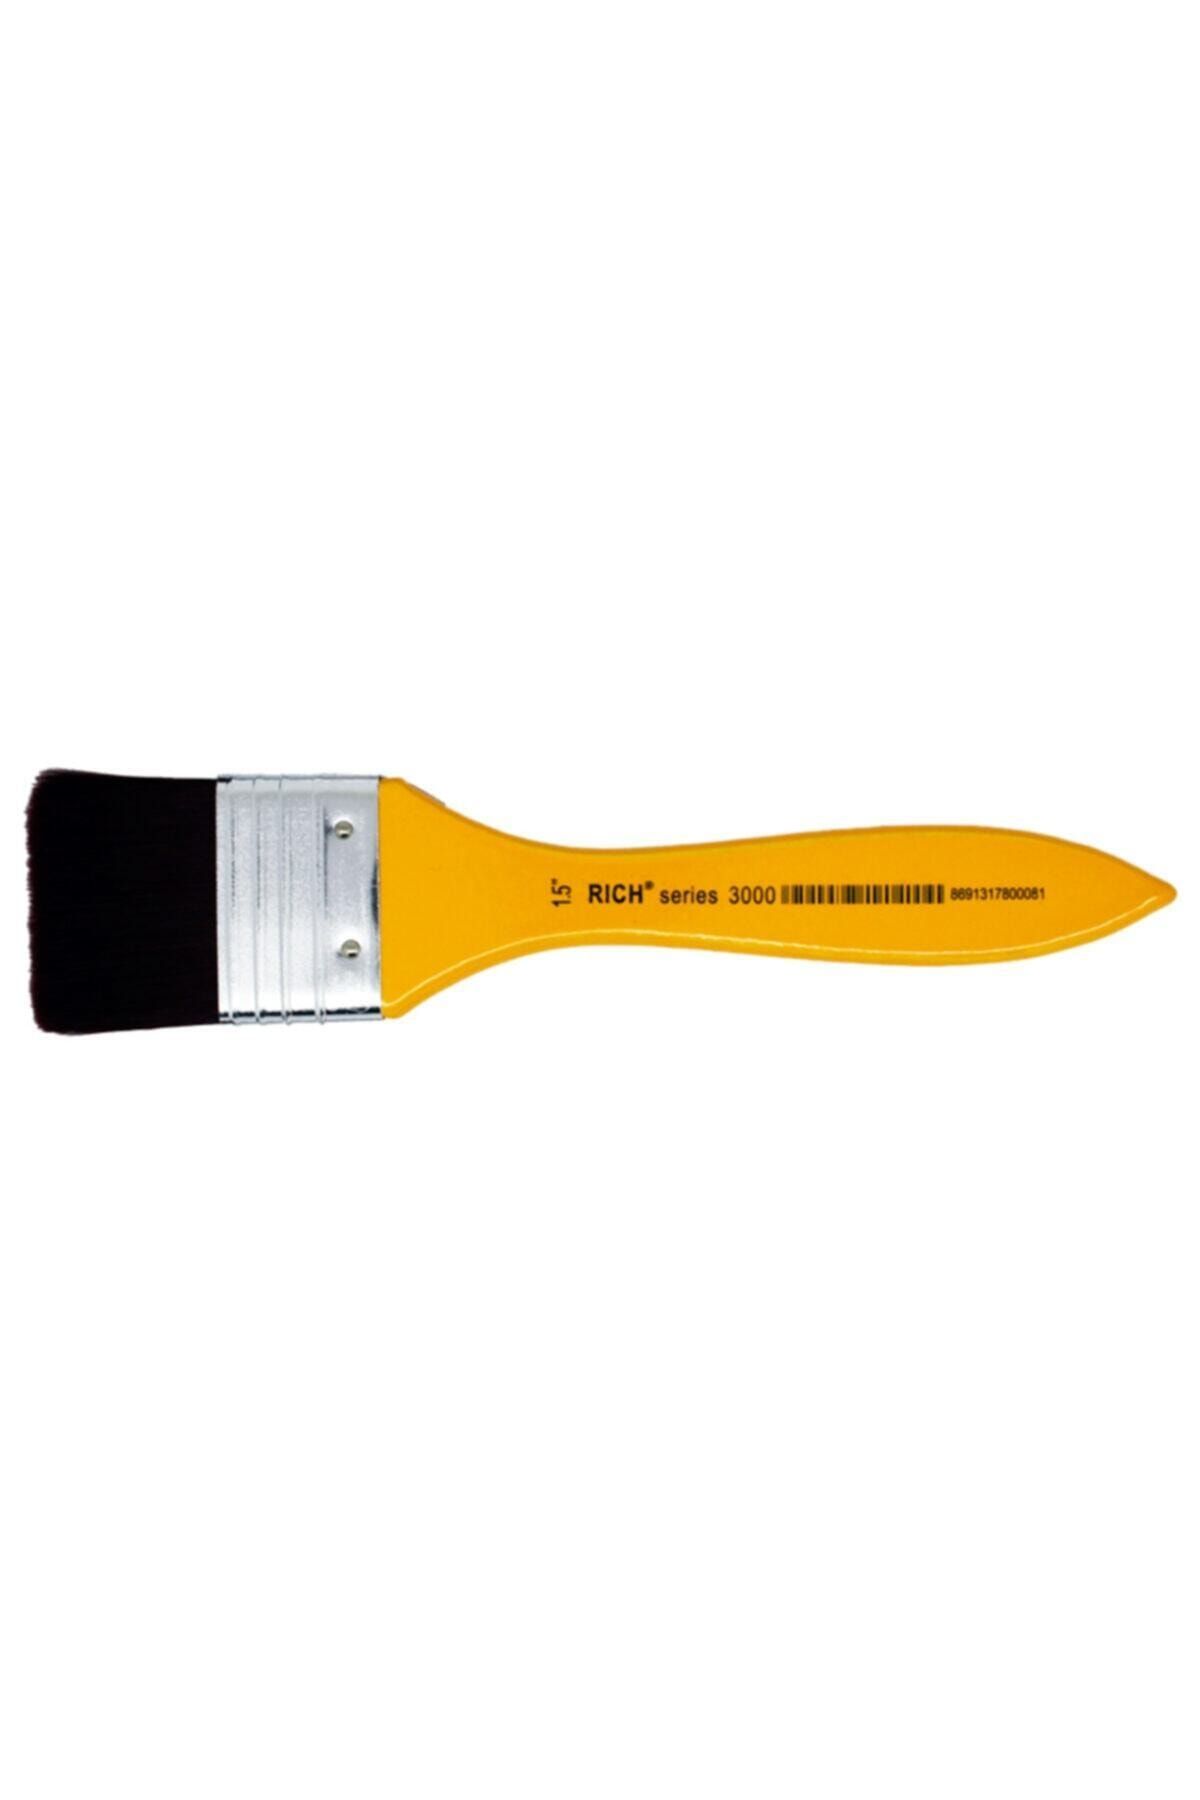 Rich Fırça Sarı Saplı Bordo Sentetik Zemin 3000 Seri No:1,5 Frç-01291